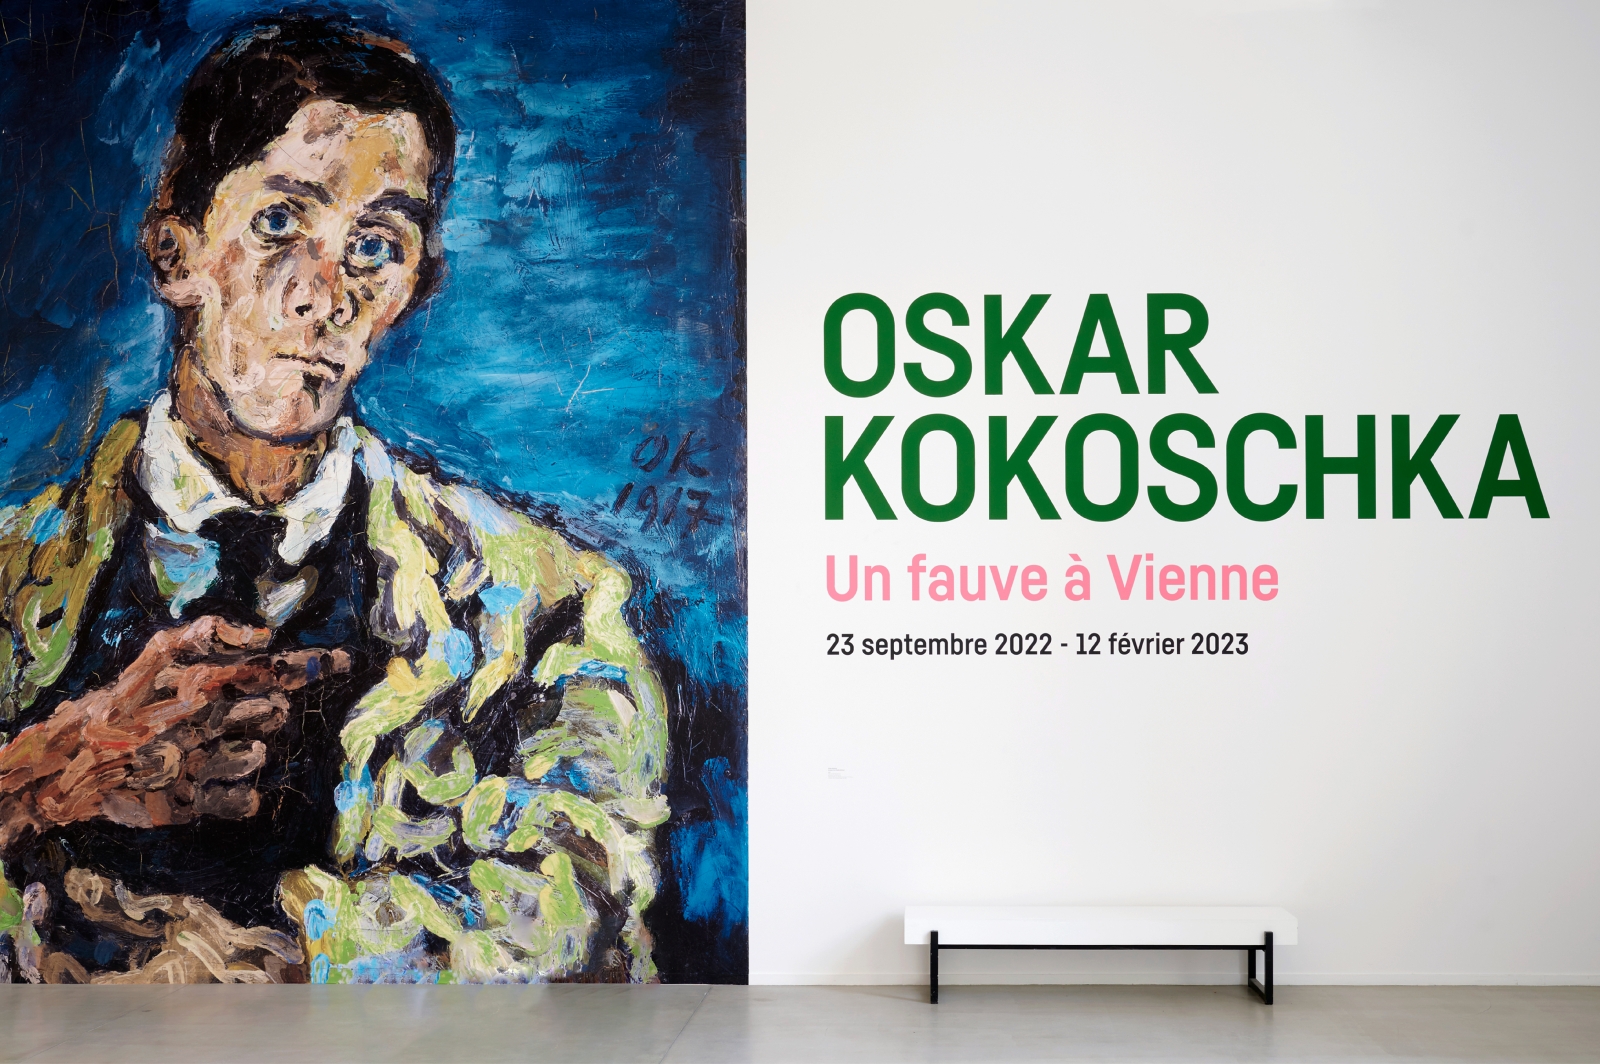 Oskar Kokoschka, Un fauve dans la ville 